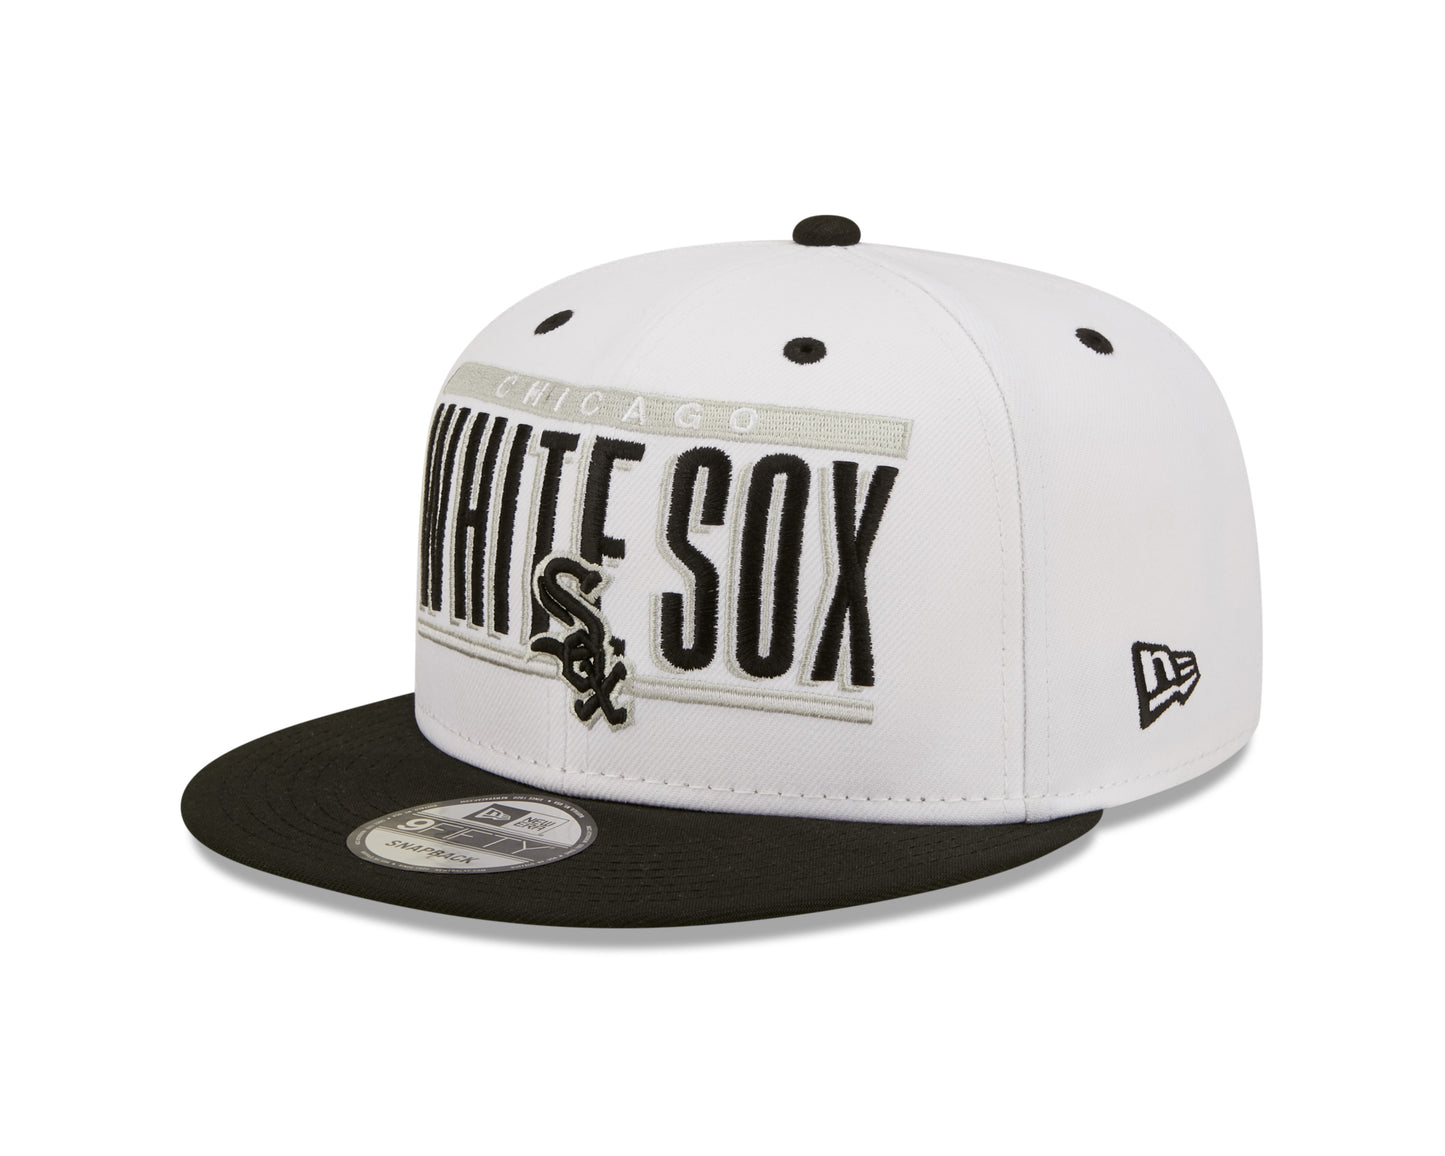 Chicago White Sox New Era Retro Title 9FIFTY Snapback Hat - White/Black